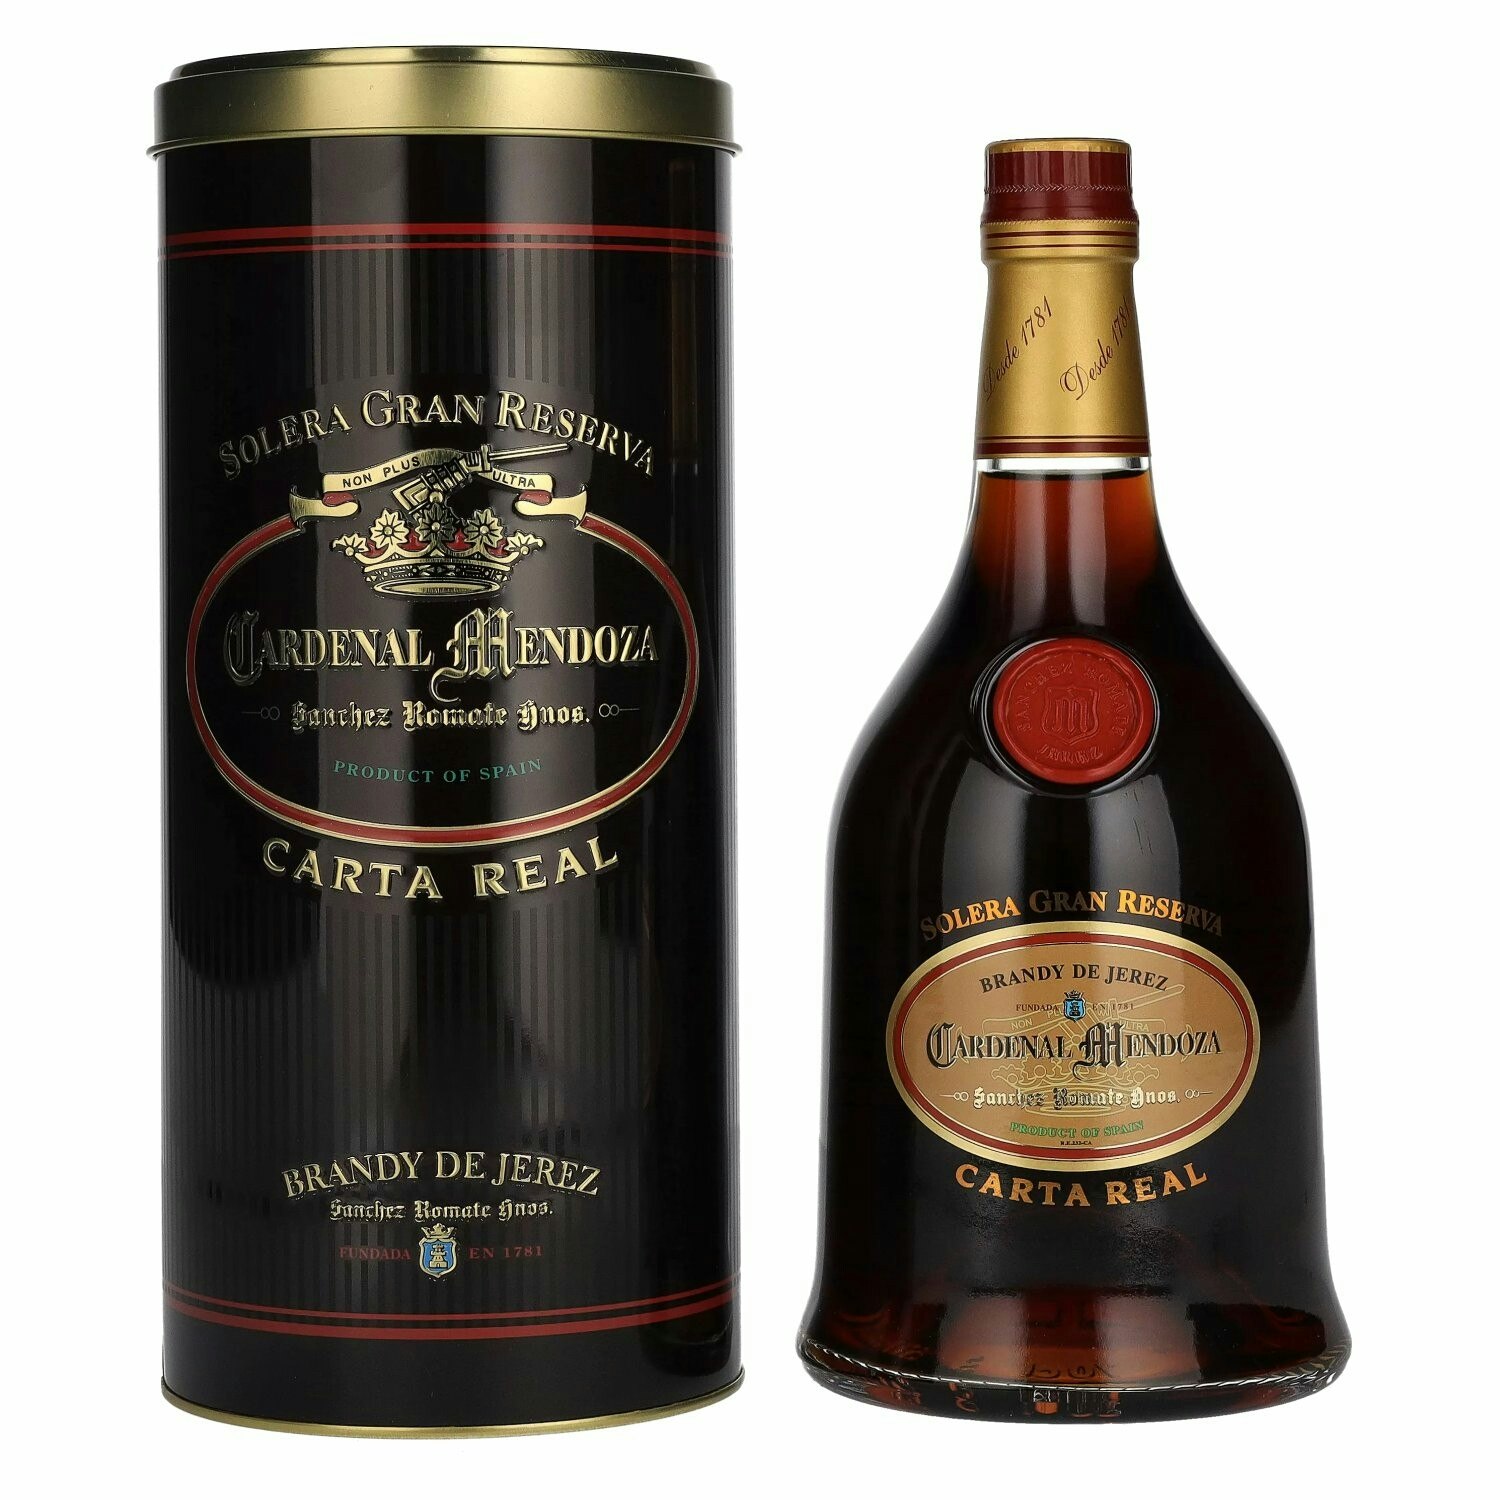 Cardenal Mendoza Carta Real Brandy de Jerez 40% Vol. 0,7l in Tinbox